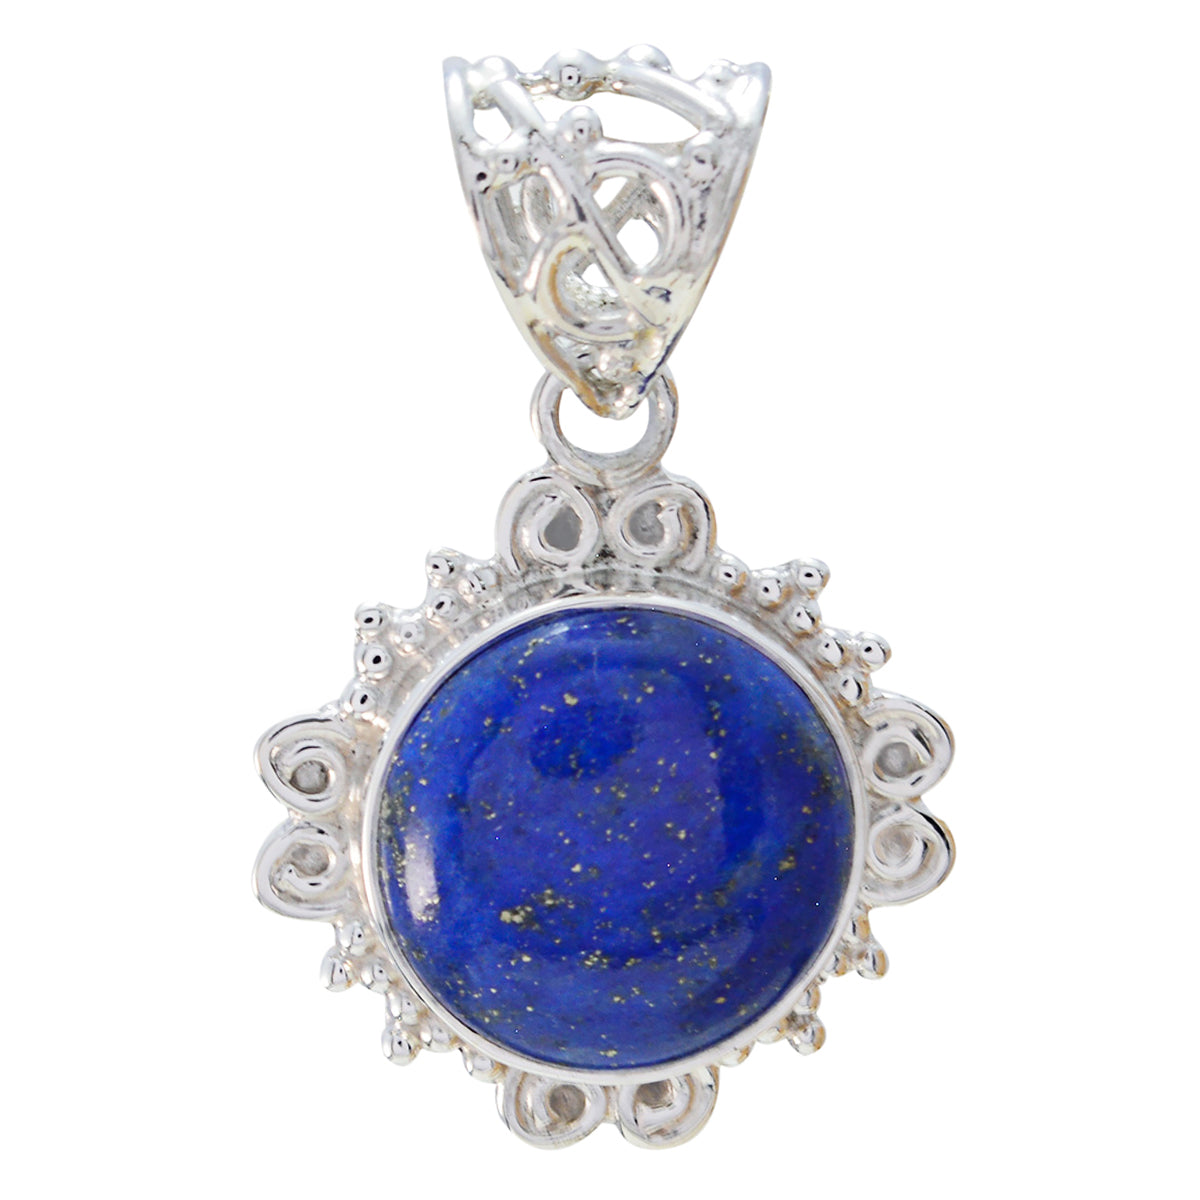 Riyo Nice Gemstone Oval Cabochon Nevy Blue Lapis Lazuli Sterling Silver Pendant gift for st. patricks day